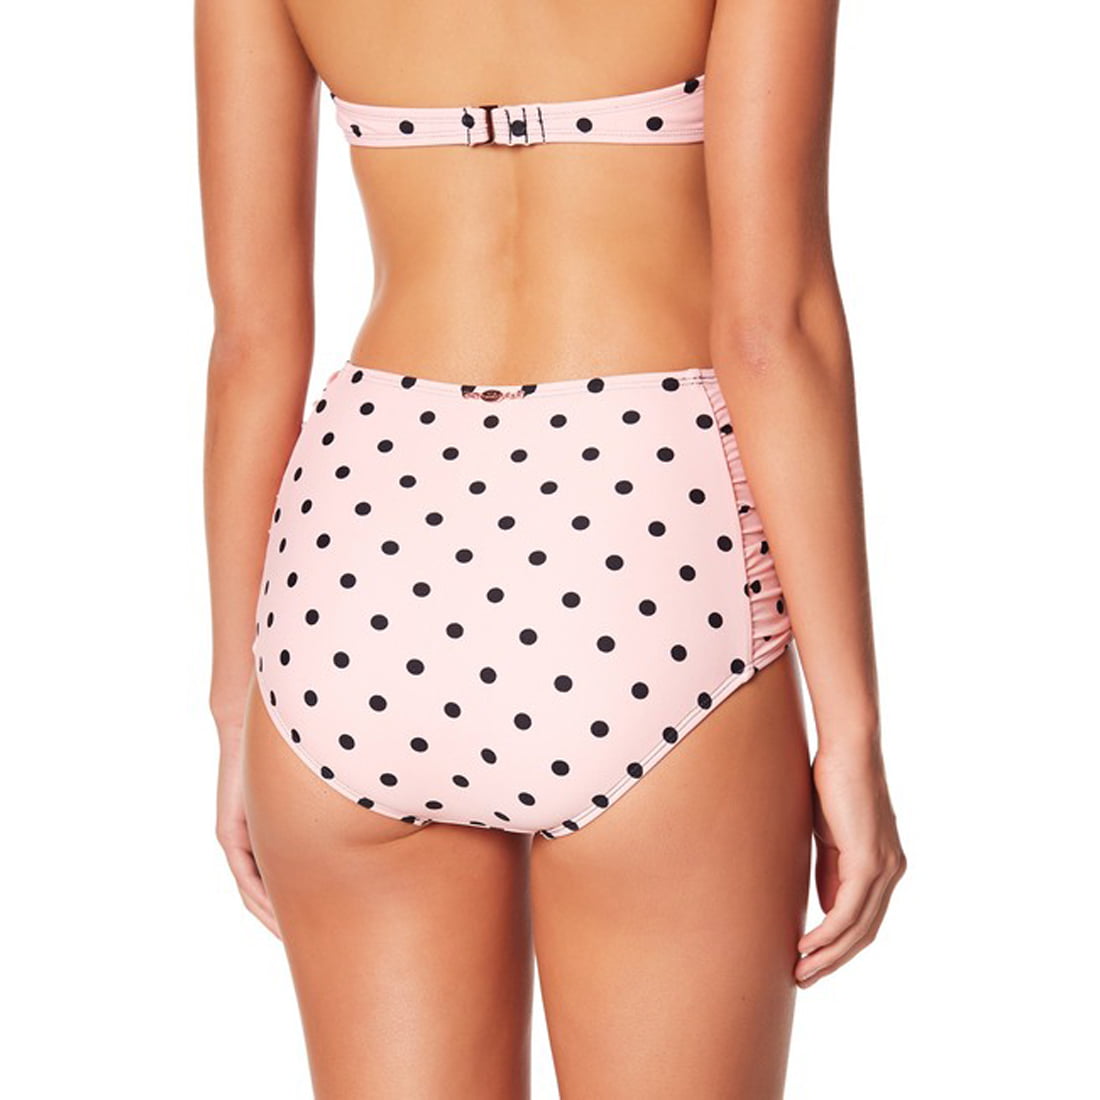 Betsey Johnson Polka Dot High-Waisted Bikini Bottom, Pink/Black, Small -  Walmart.com